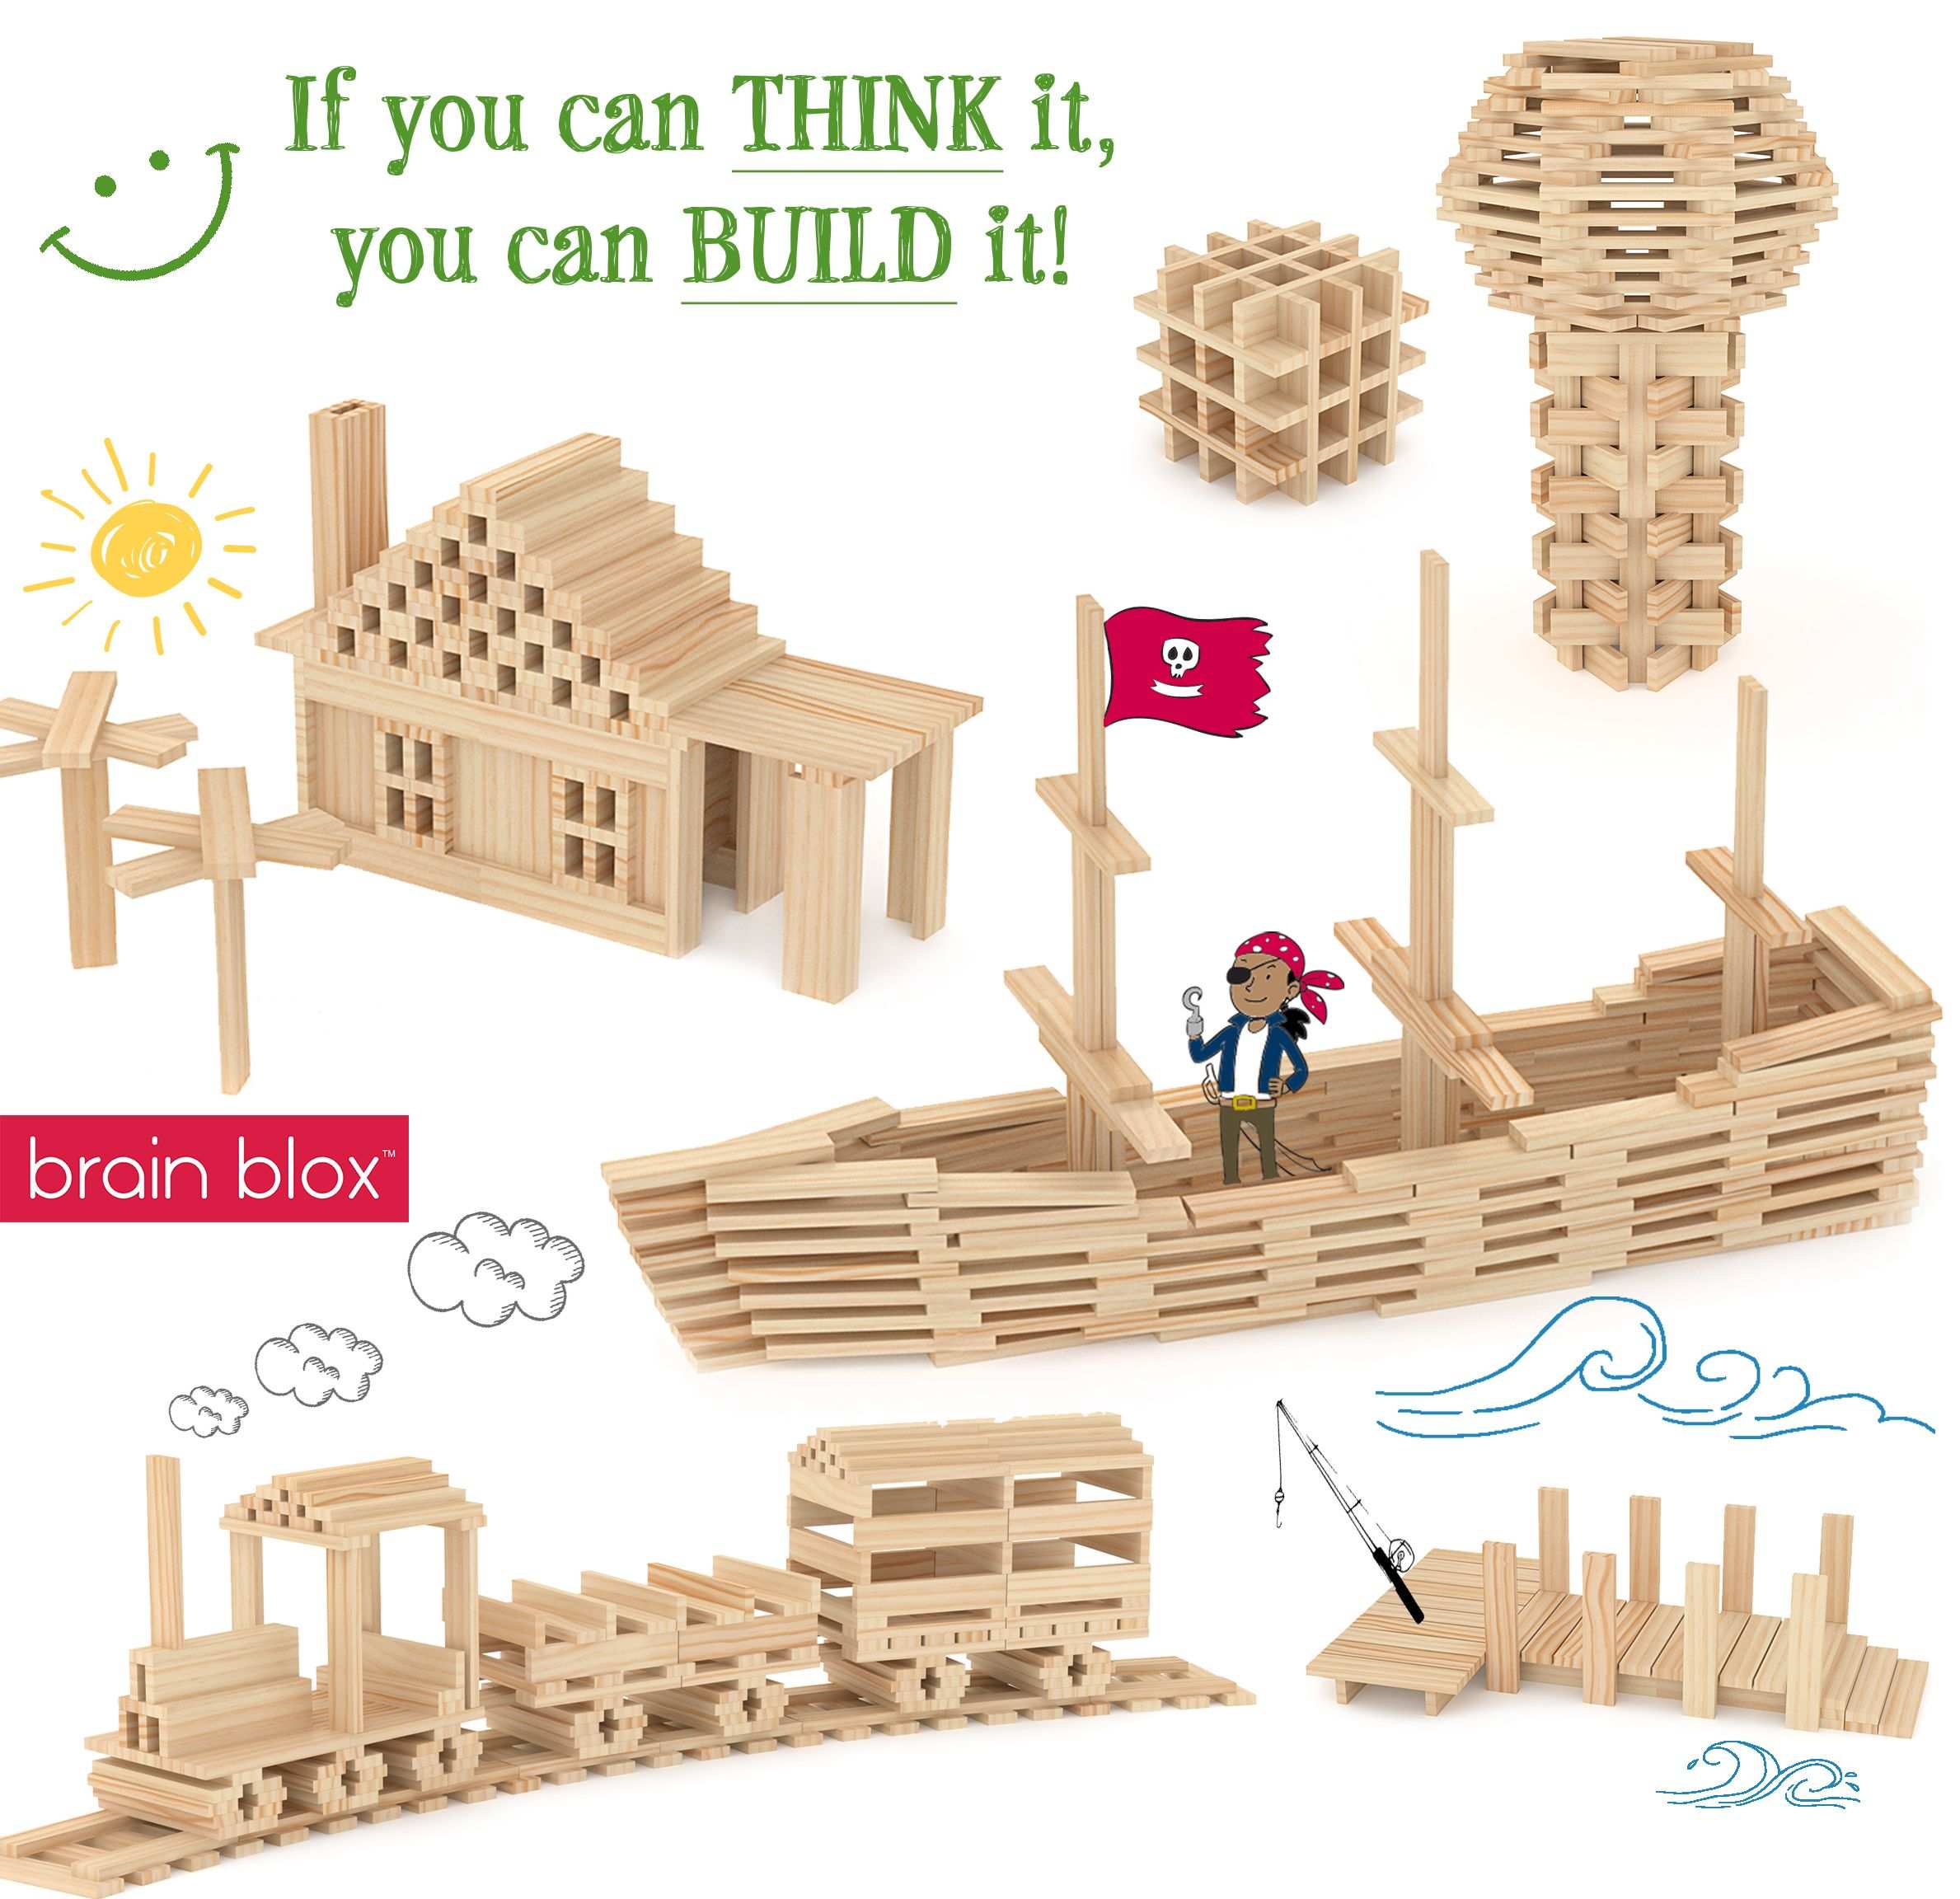 Screen Free Kids Challenge Https Www Amazon Com Building Planks Toy Dp B079zjffd5 Brain Blox Building Wooden Building Blocks Building For Kids Kids Blocks